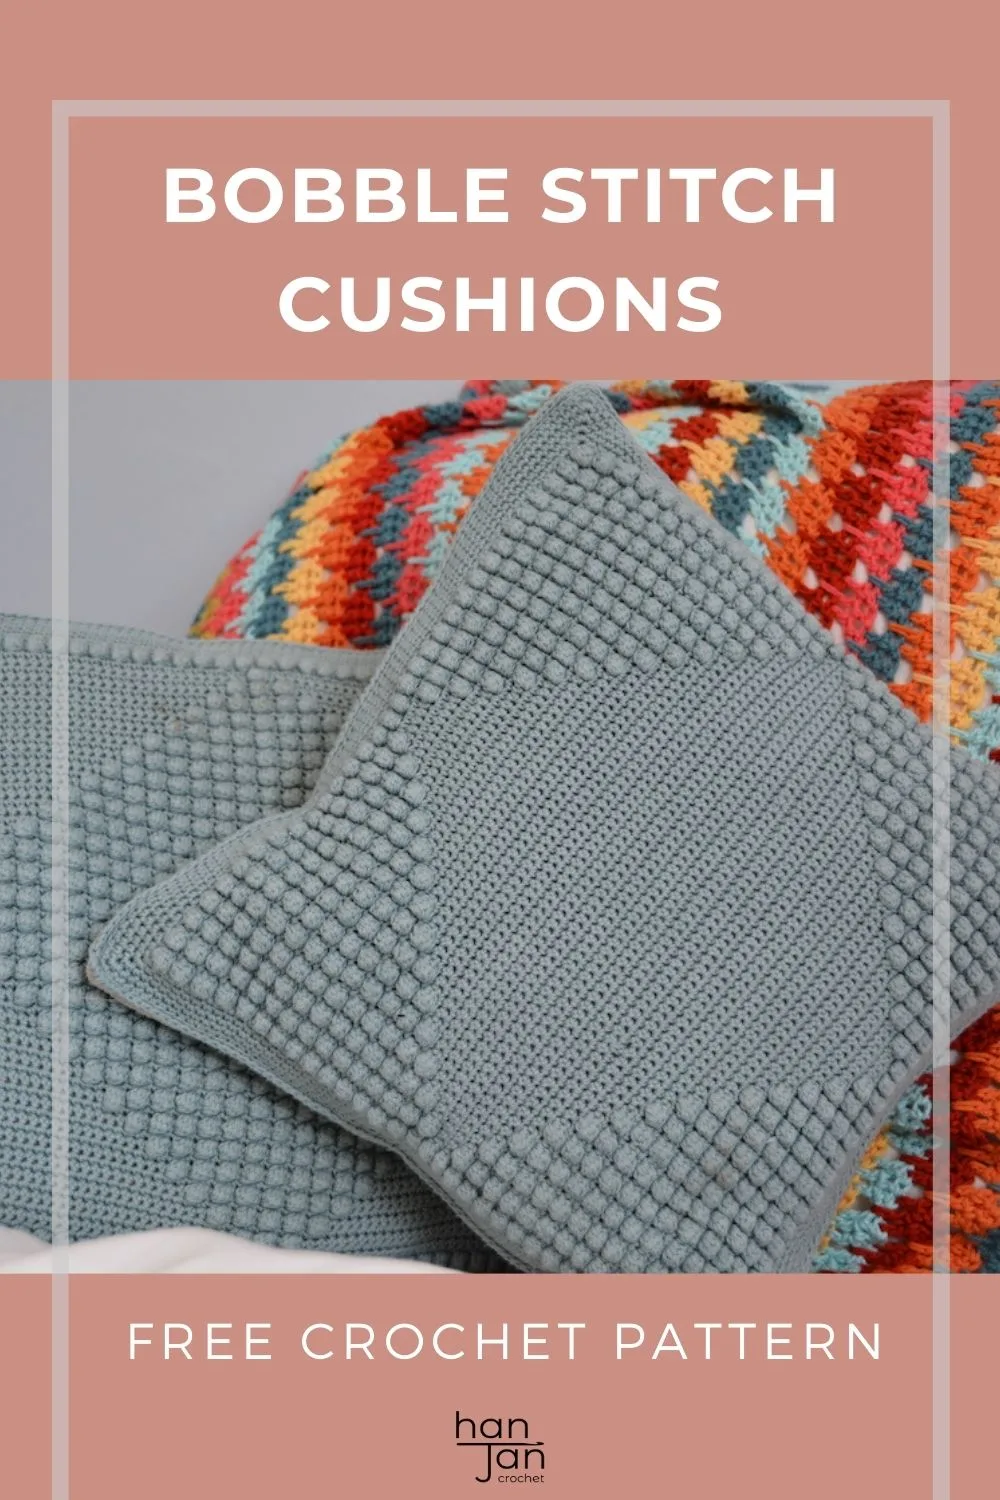 pin showing bobble stitch crochet cushion pattern, a modern home decor pattern